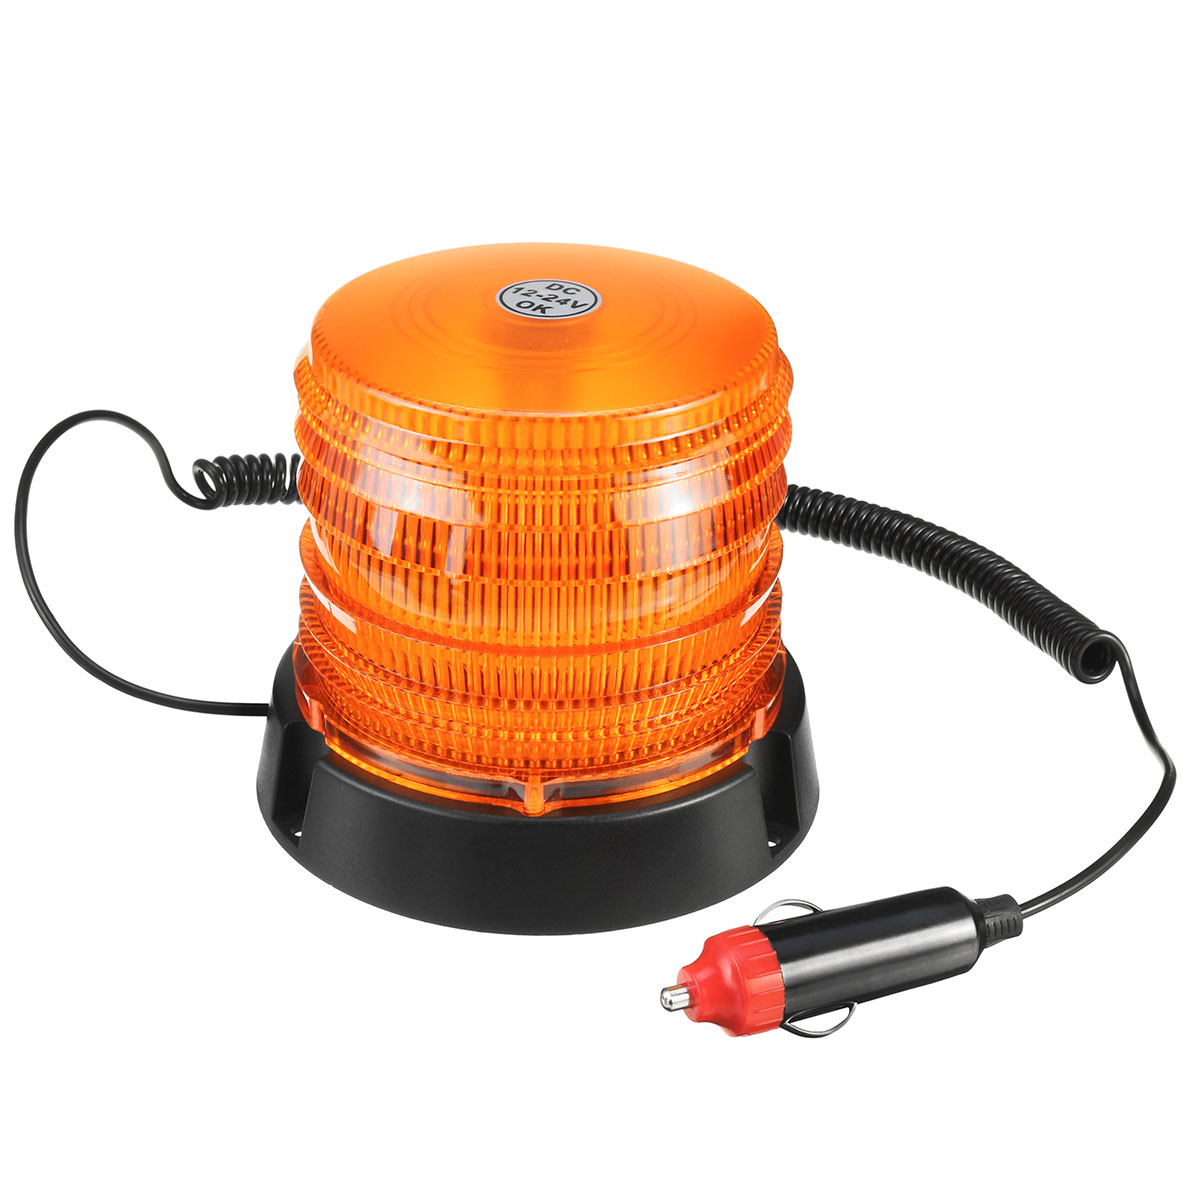 16-SMD-LED-12V-24V-Magnetic-Flashing-Beacon-Strobe-Recovery-Warning-Light-Amber-1713020